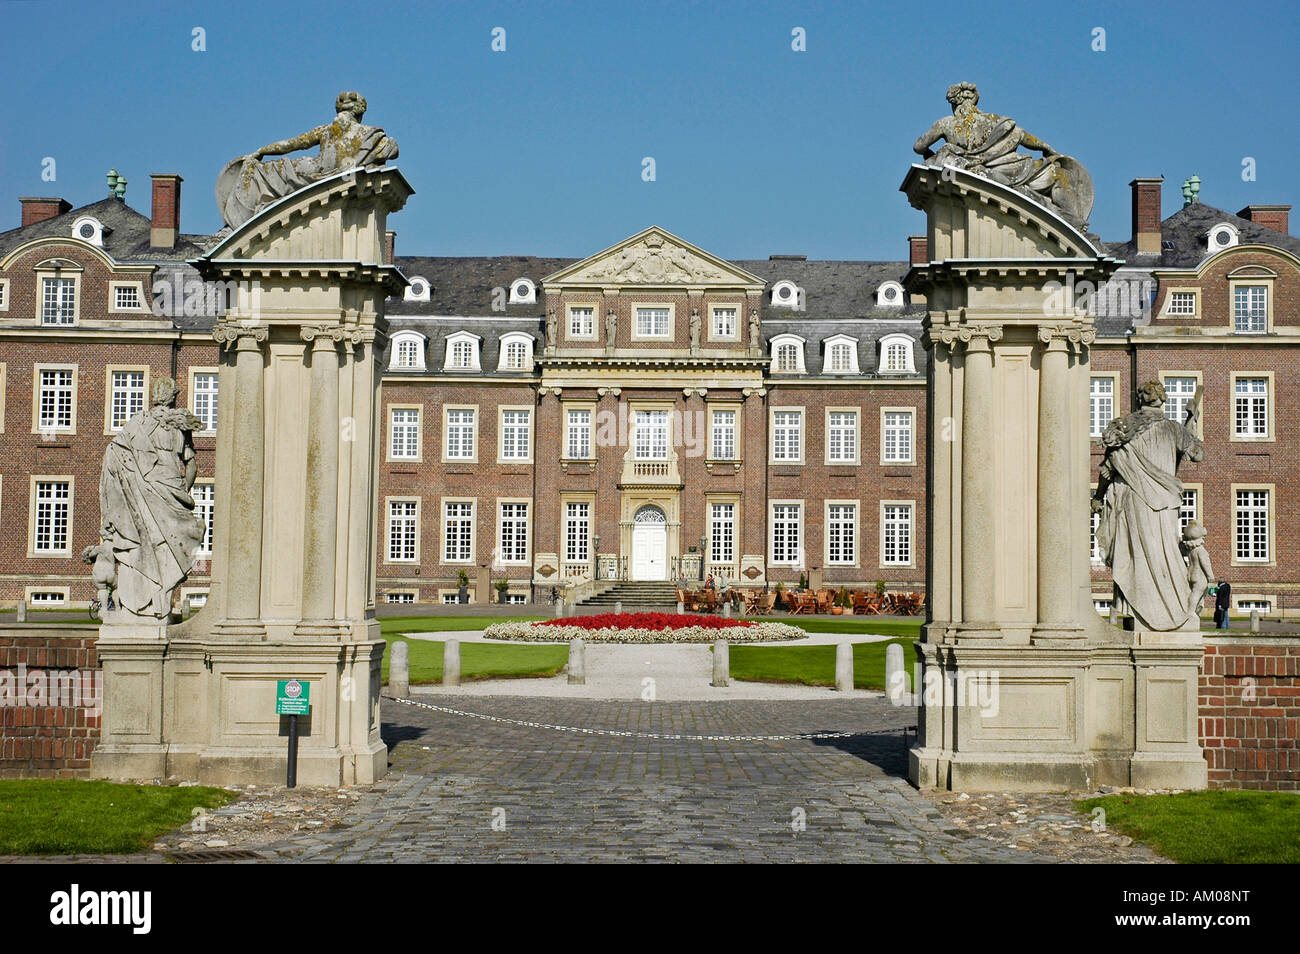 Entrance, castle Nordkirchen, Muensterland, North Rhine-Westphalia, Germany Stock Photo